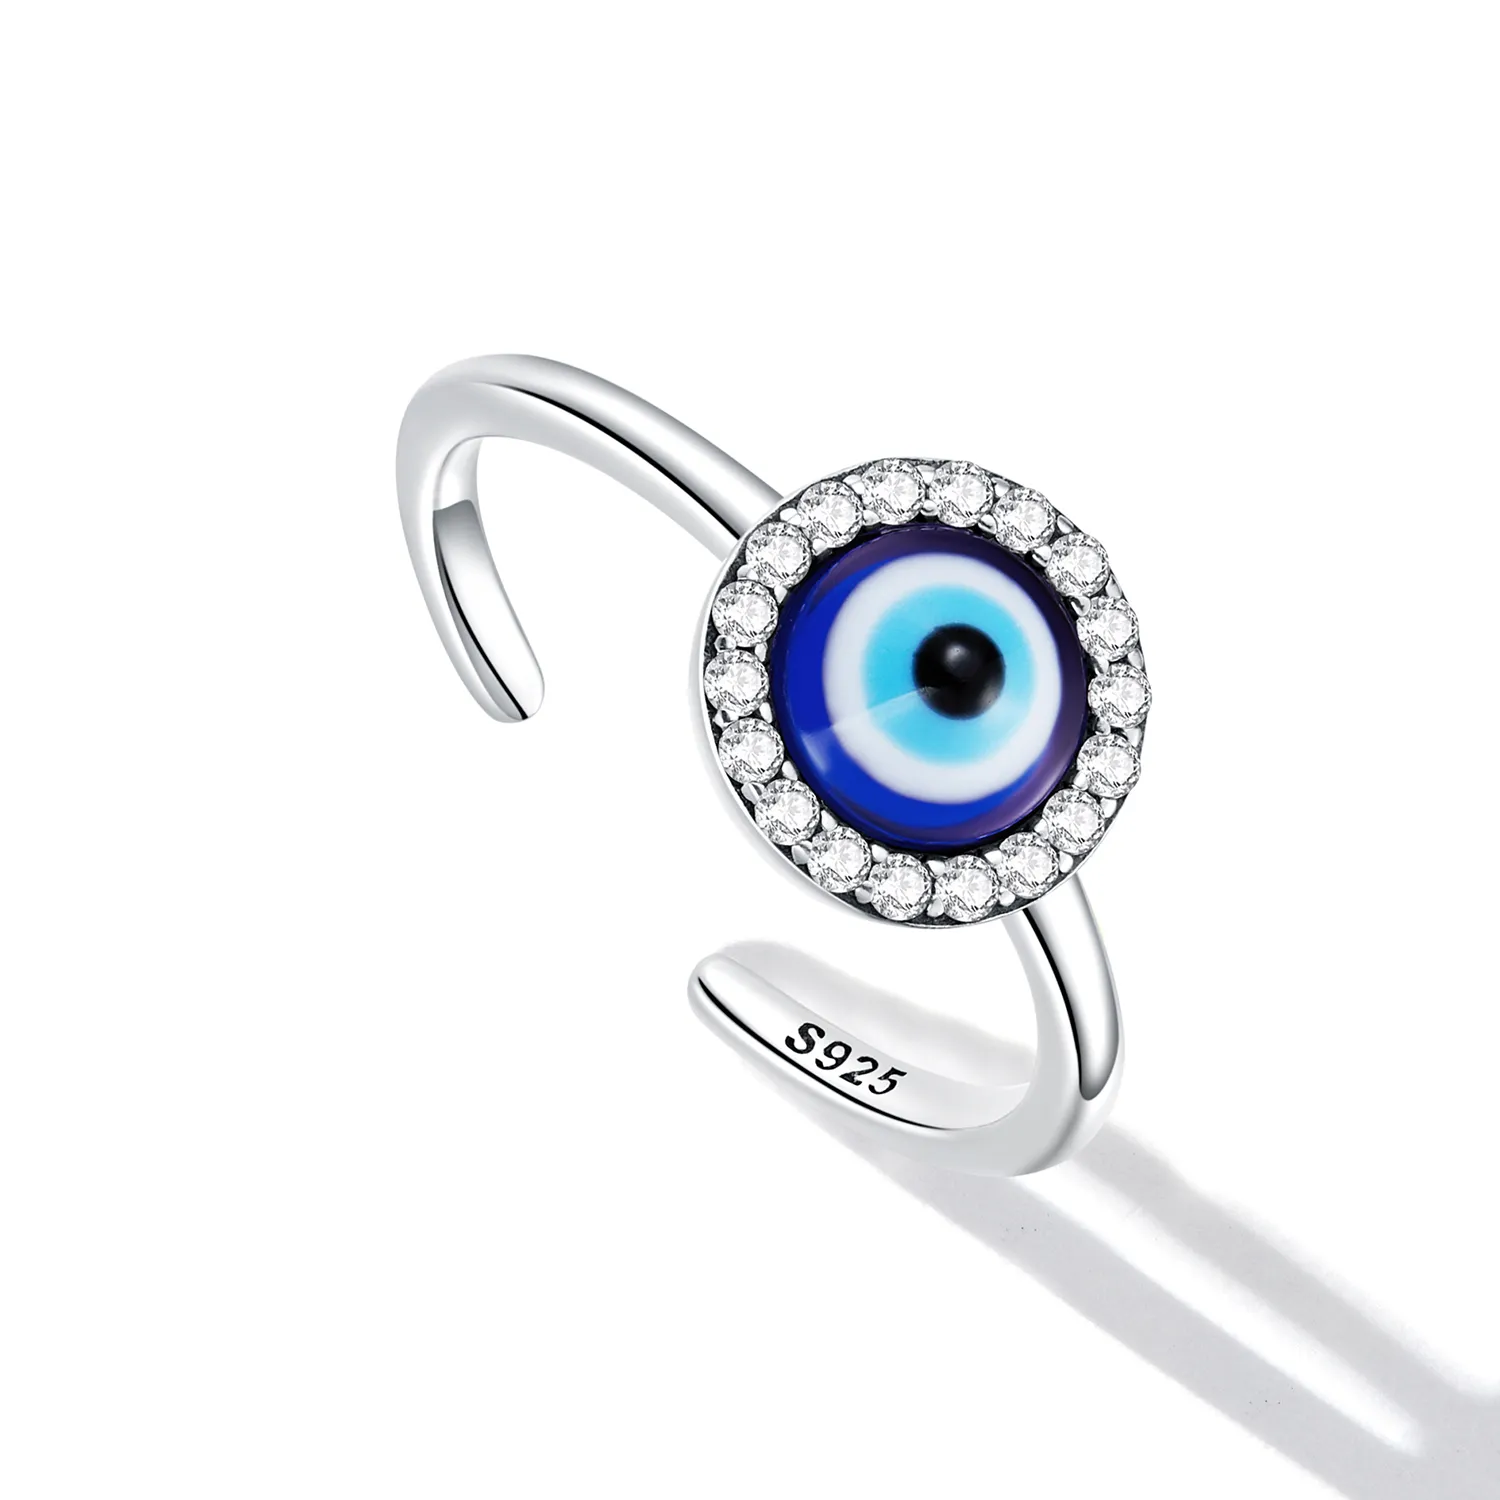 Pandora Style Devil Eye Open Ring - BSR254